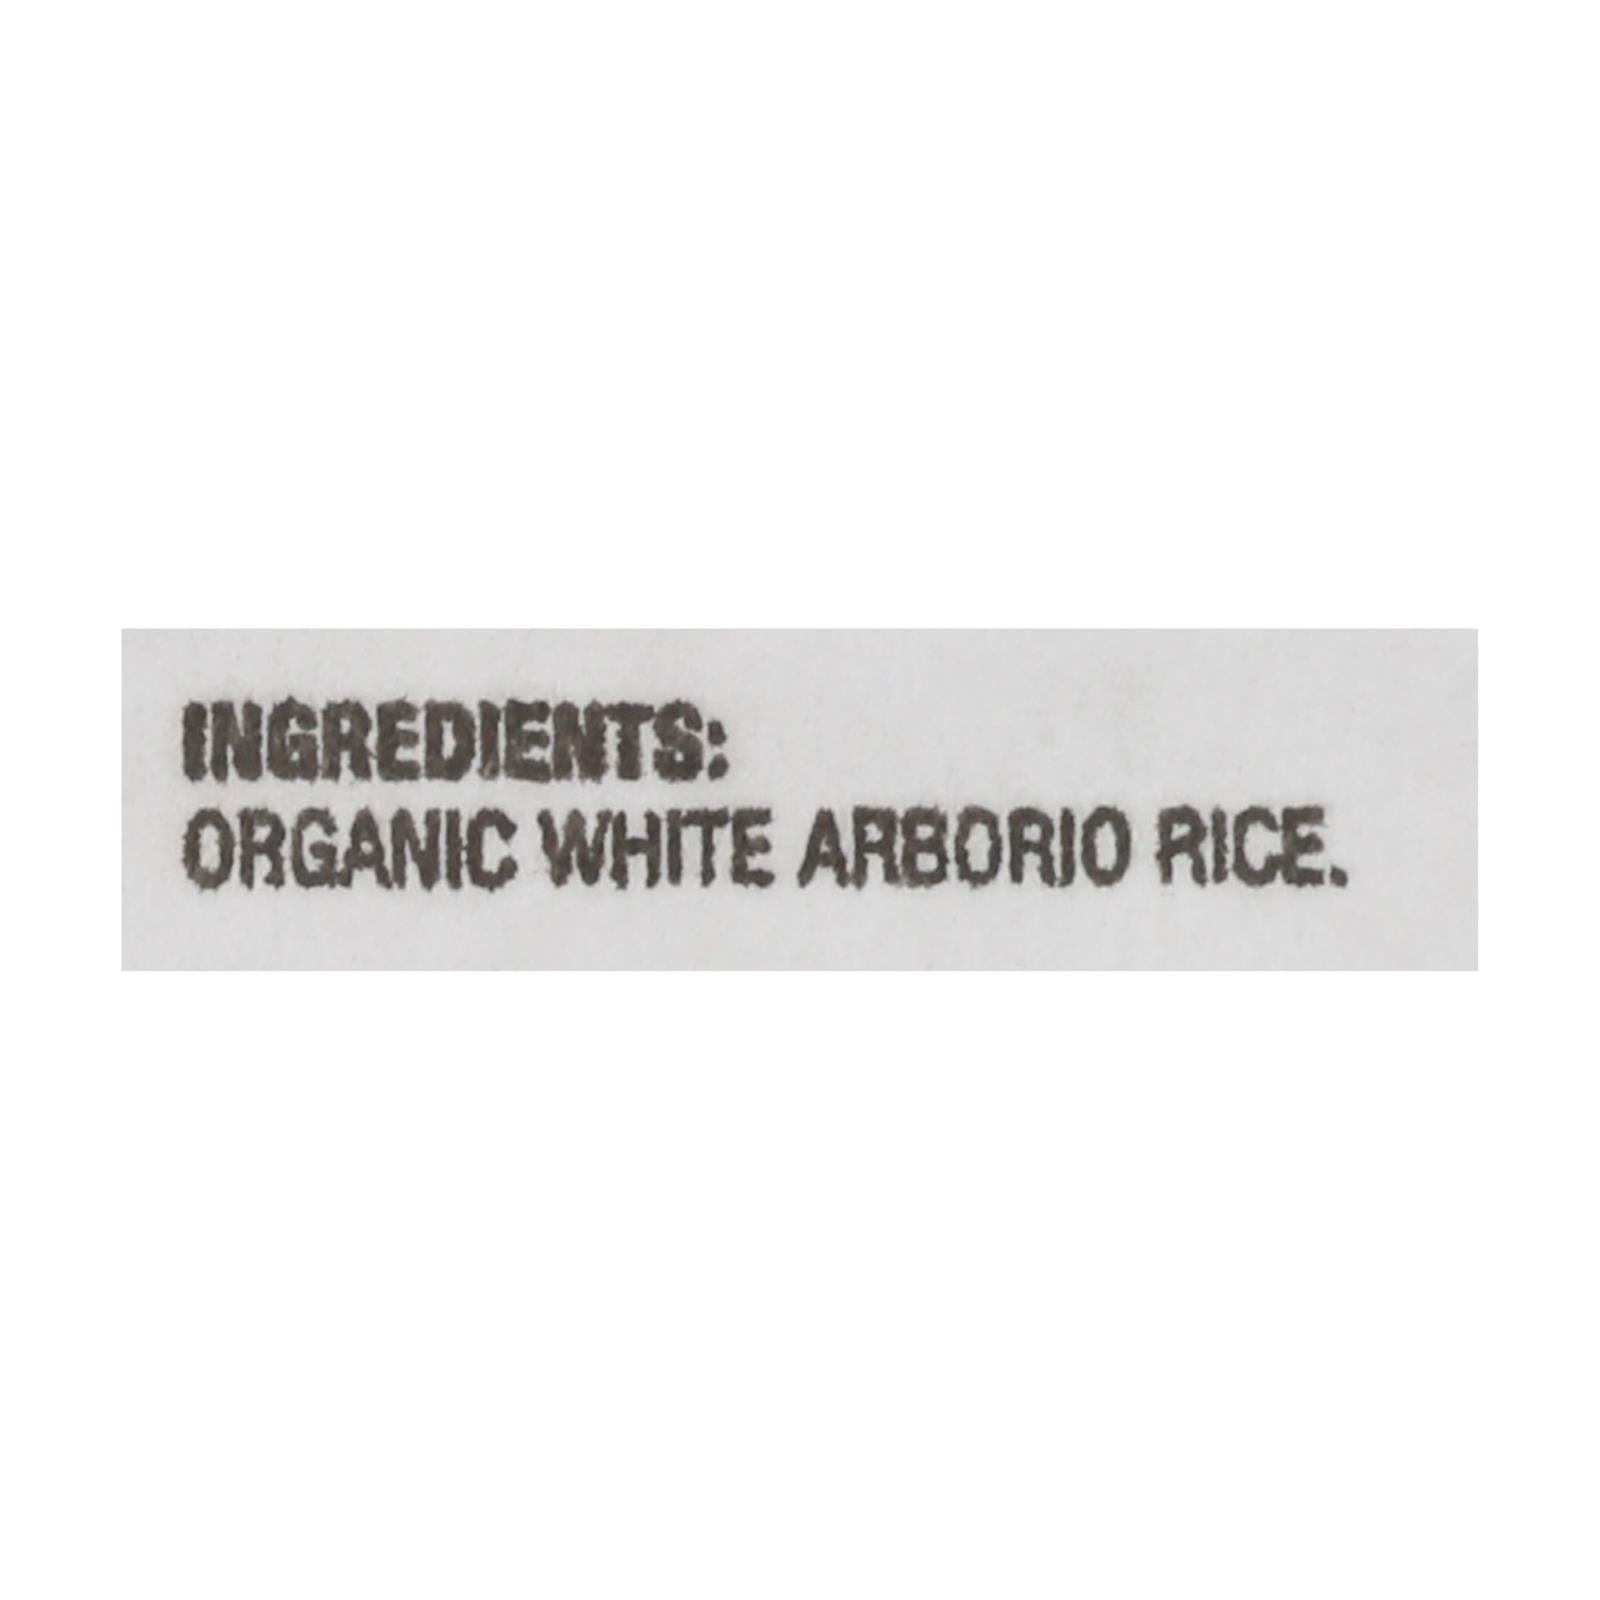 Lundberg Family Farms Organic California White Arborio Rice - Single Bulk Item - 25lb